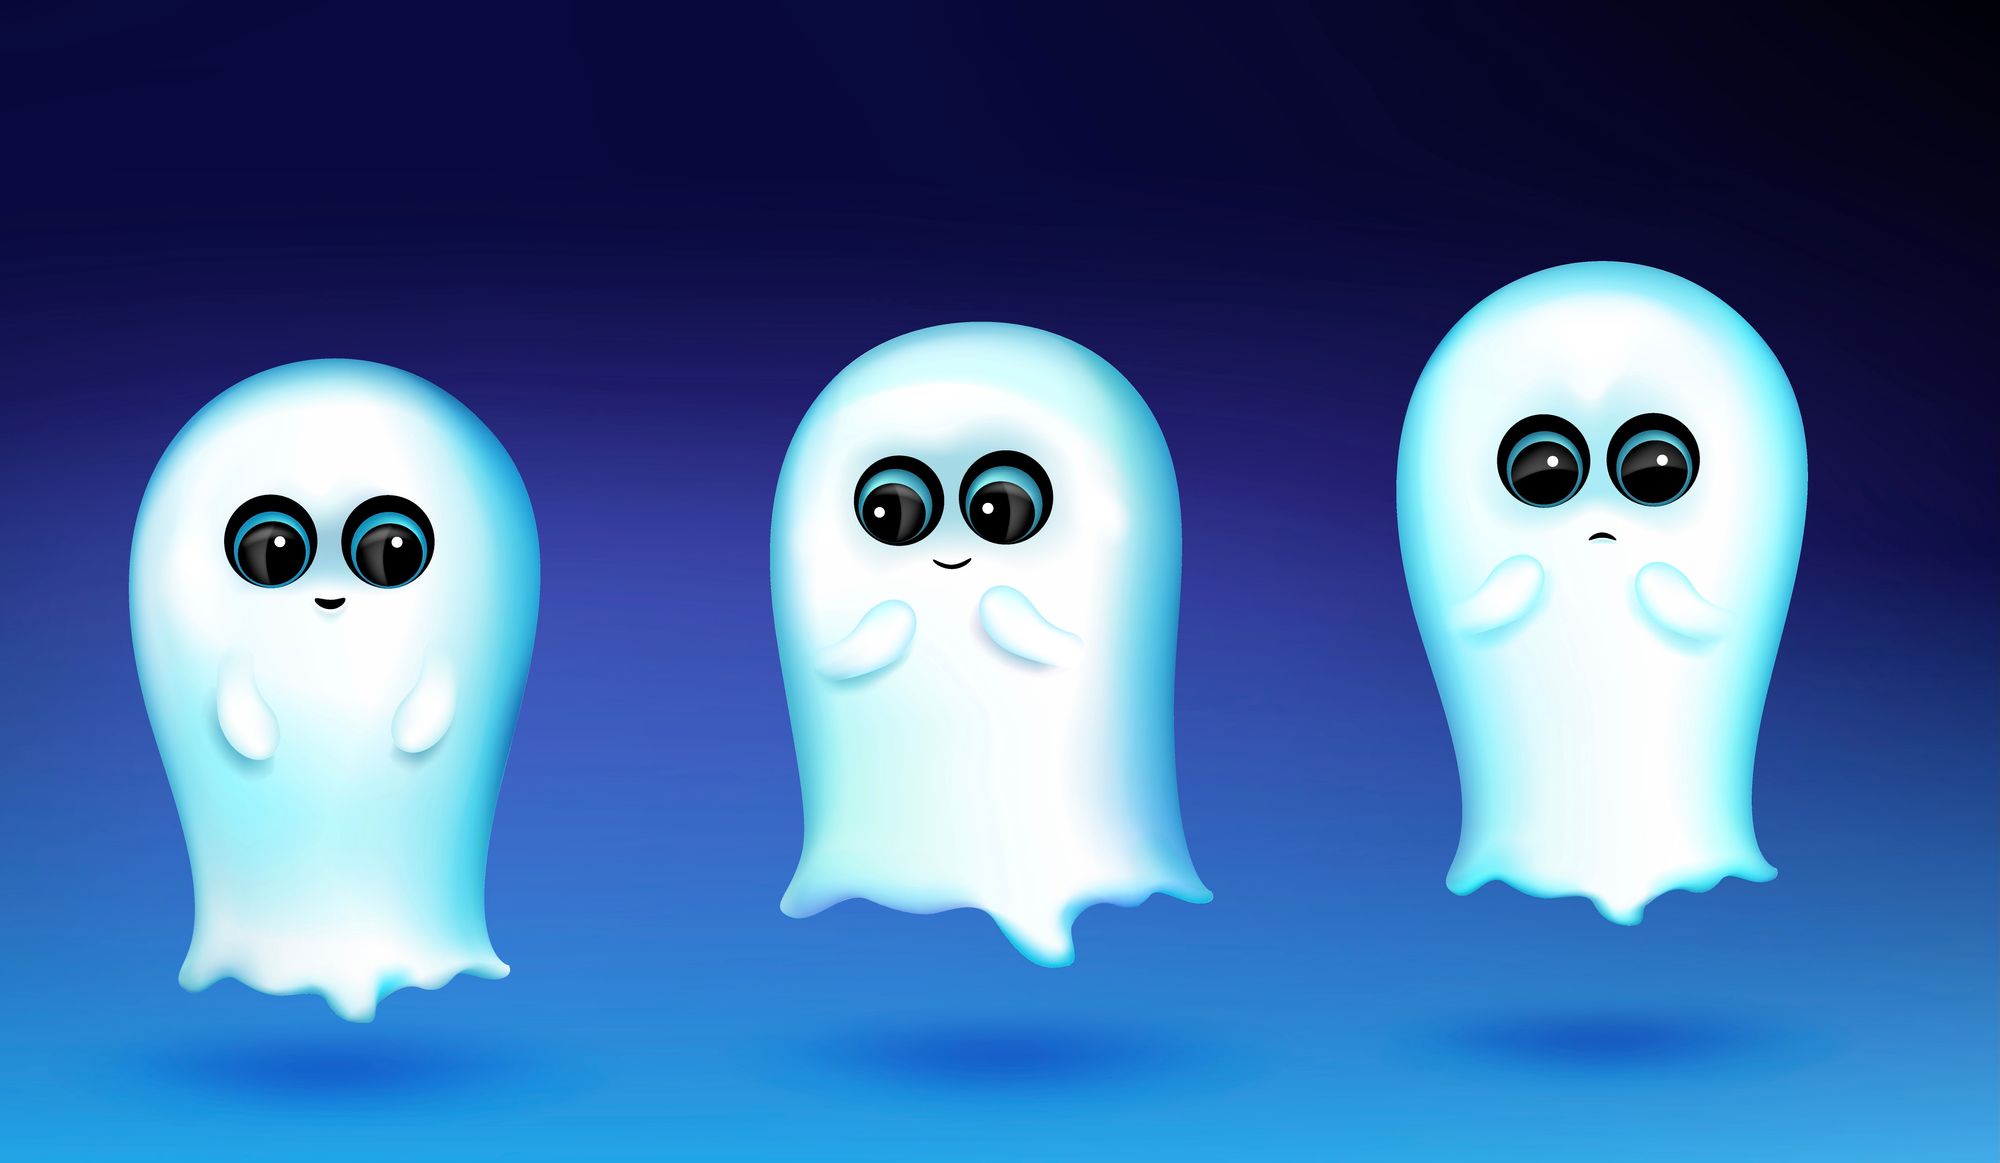 Three cute ghosts